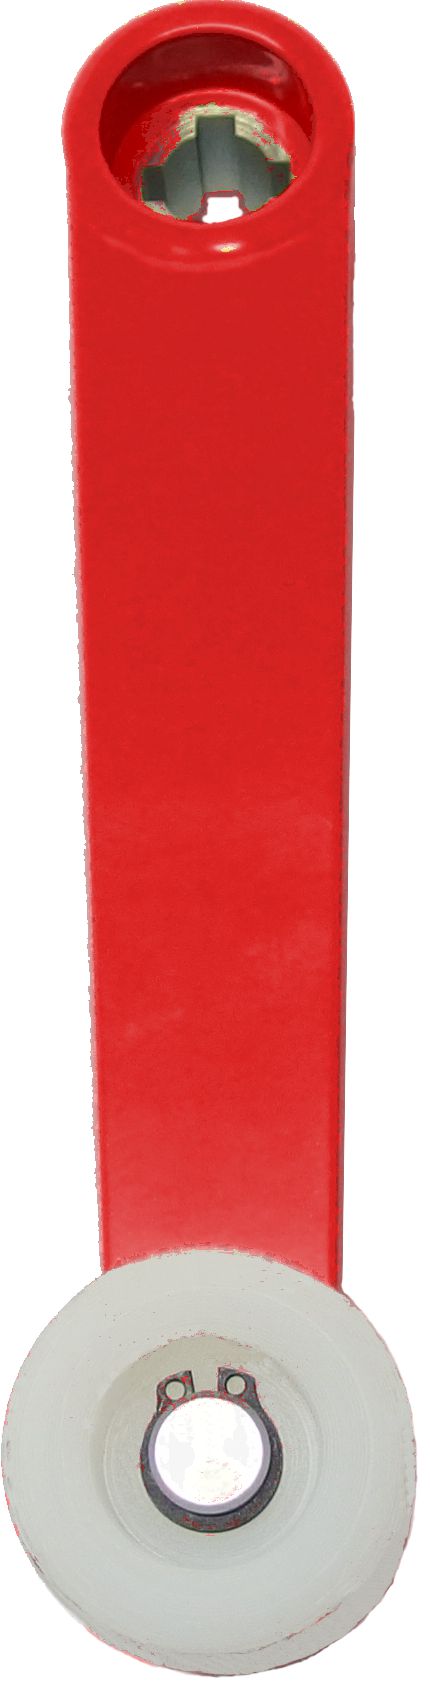 Páka R160 ocel červená